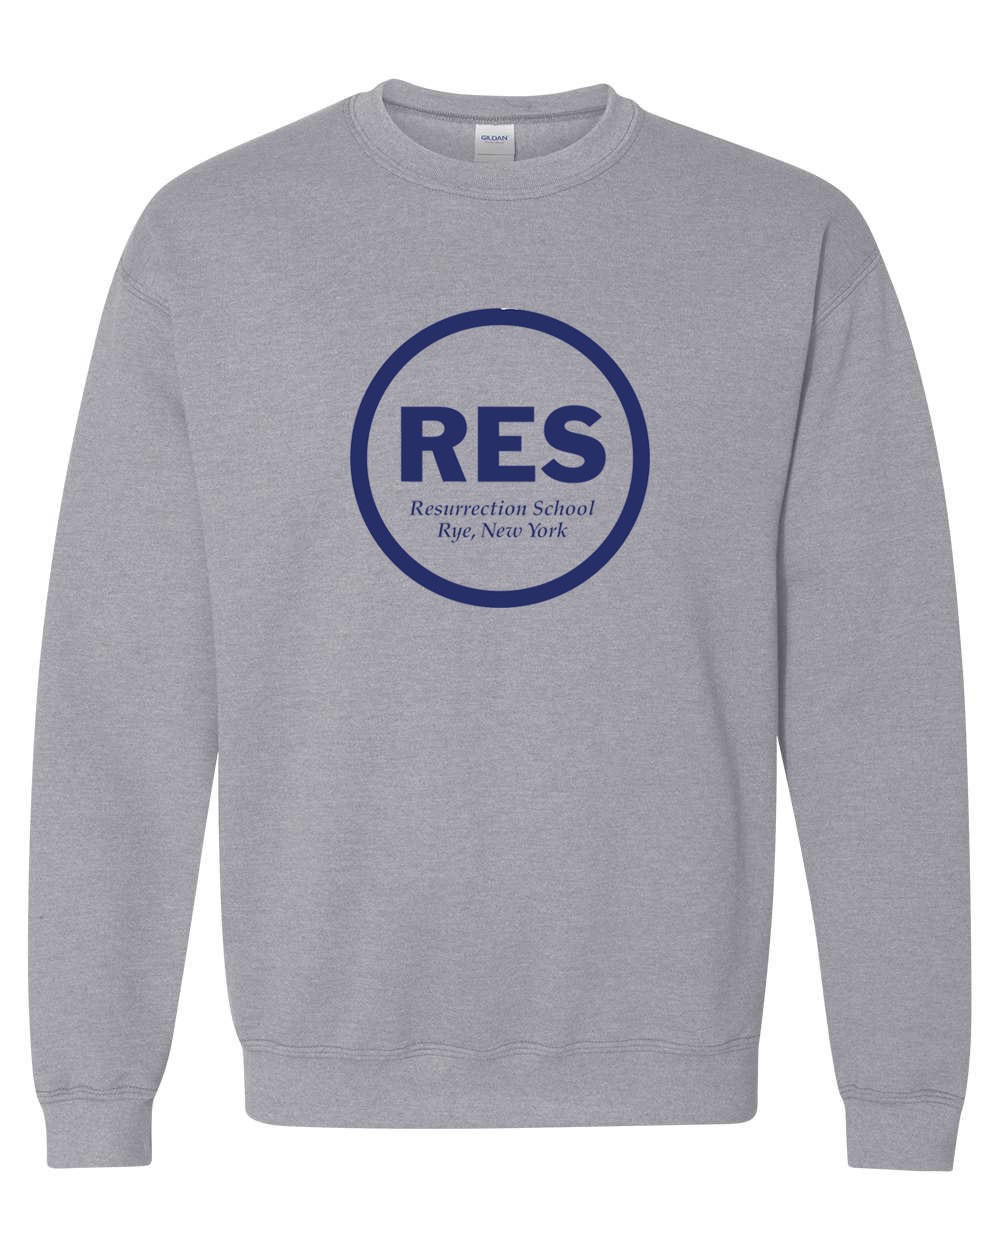 STAFF Resurrection Sweatshirt w/ Navy Logo - Please Allow 2-3 Weeks for Delivery